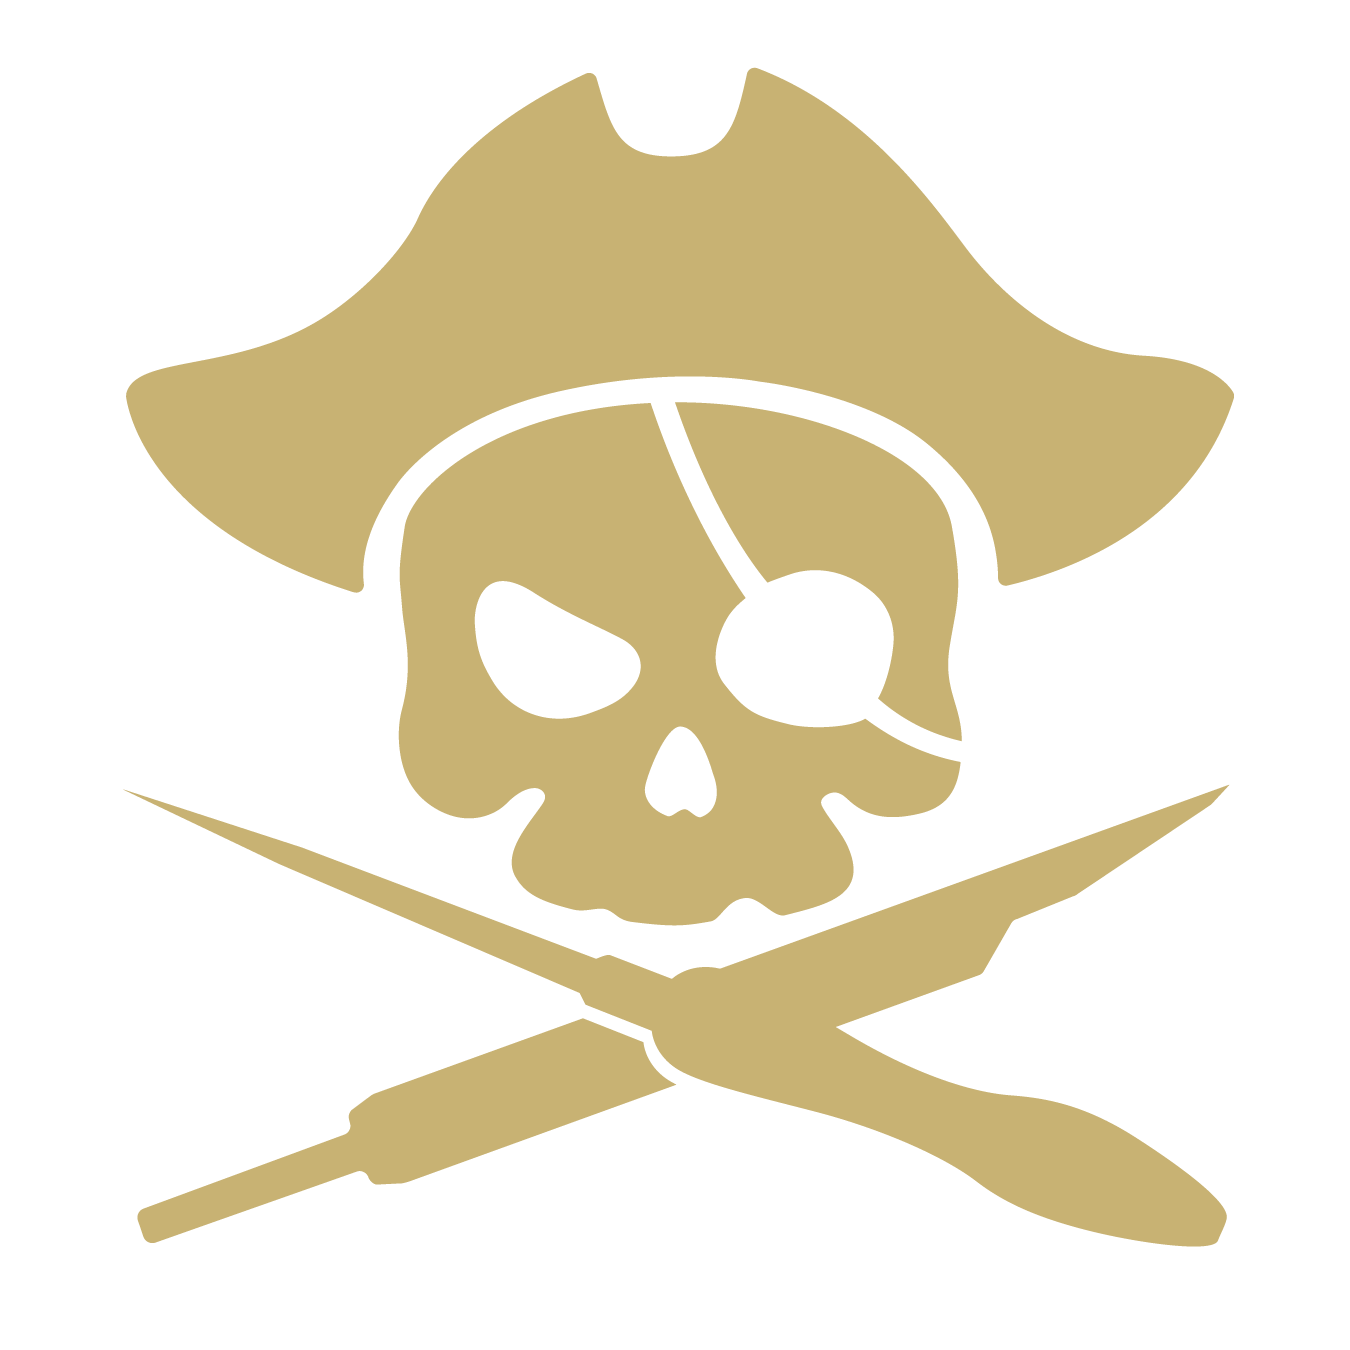 Pirate Goods